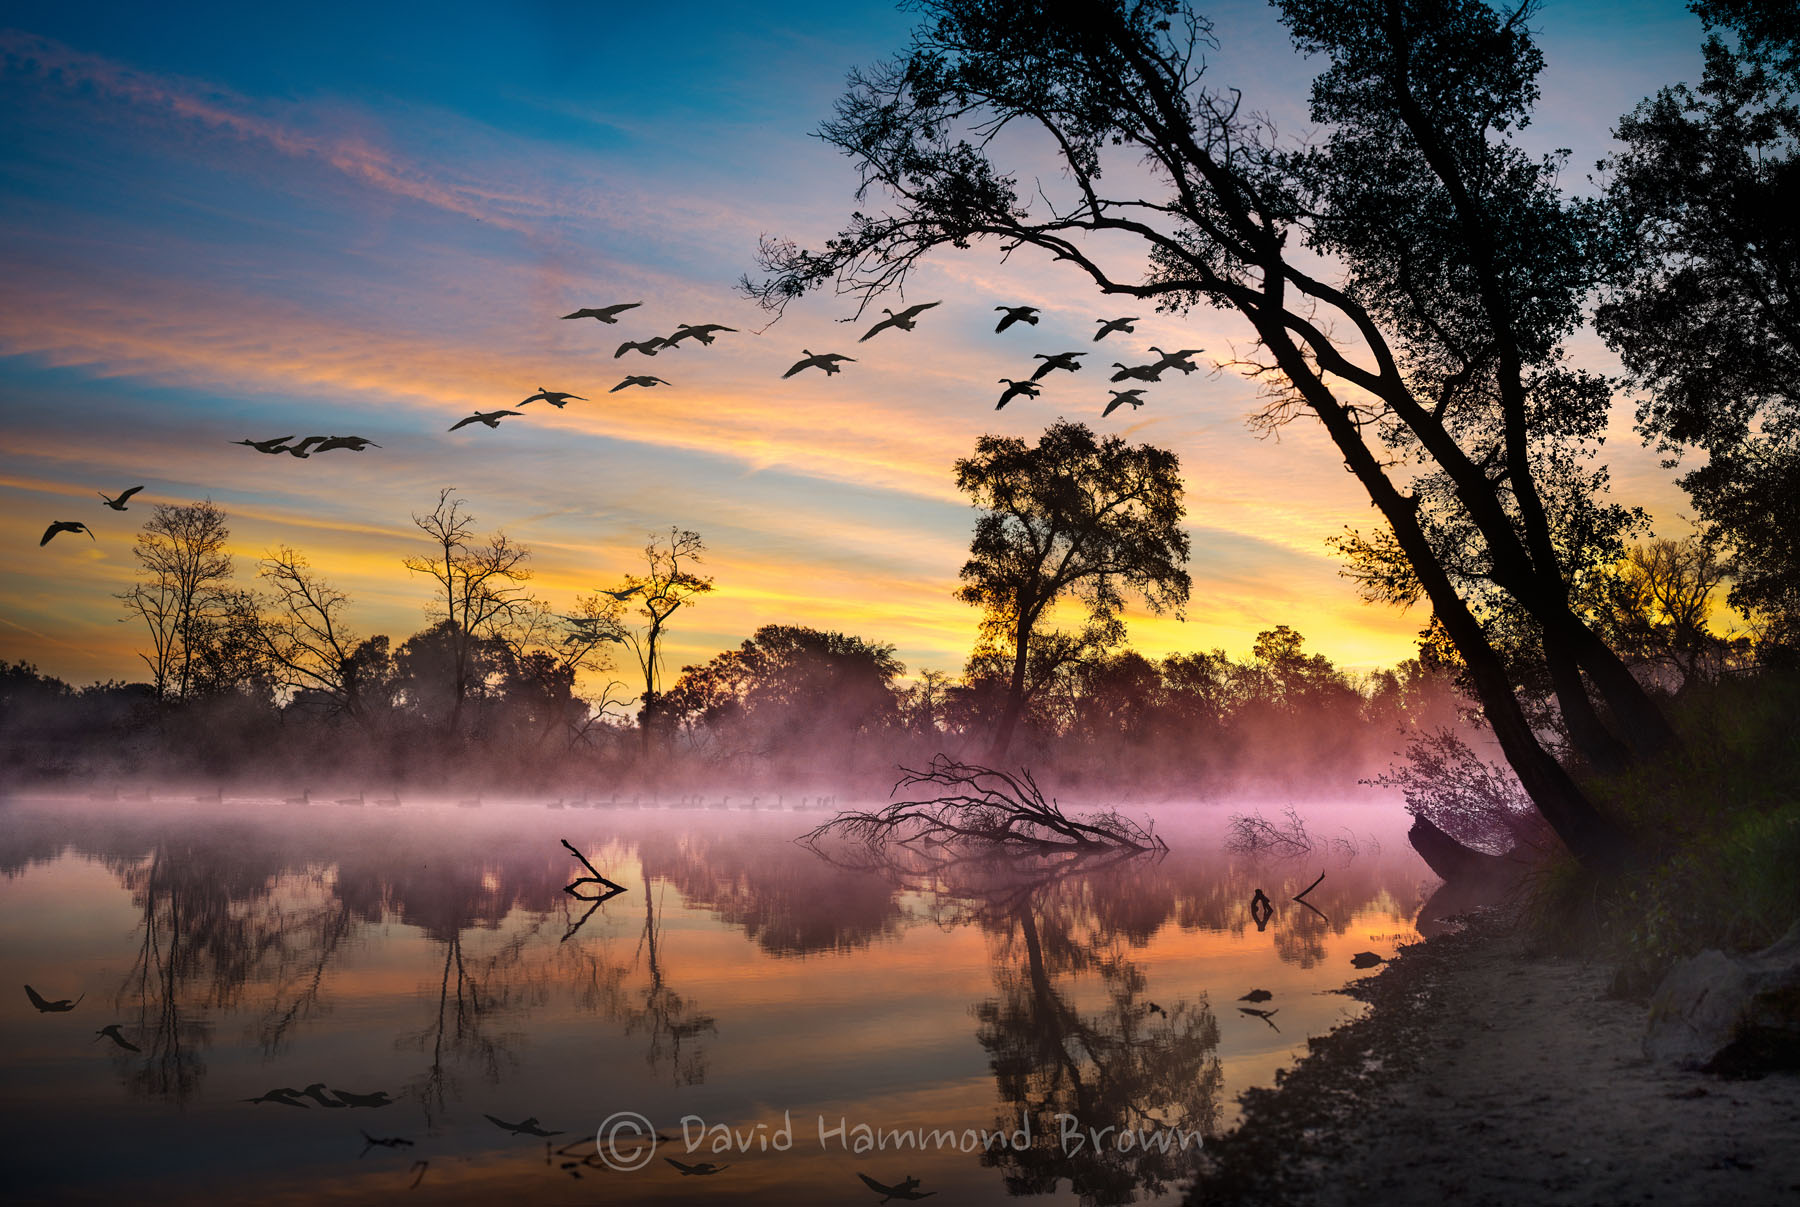 David Hammond Brown Photography - Sunrise on the Mokelumne - Lodi, California